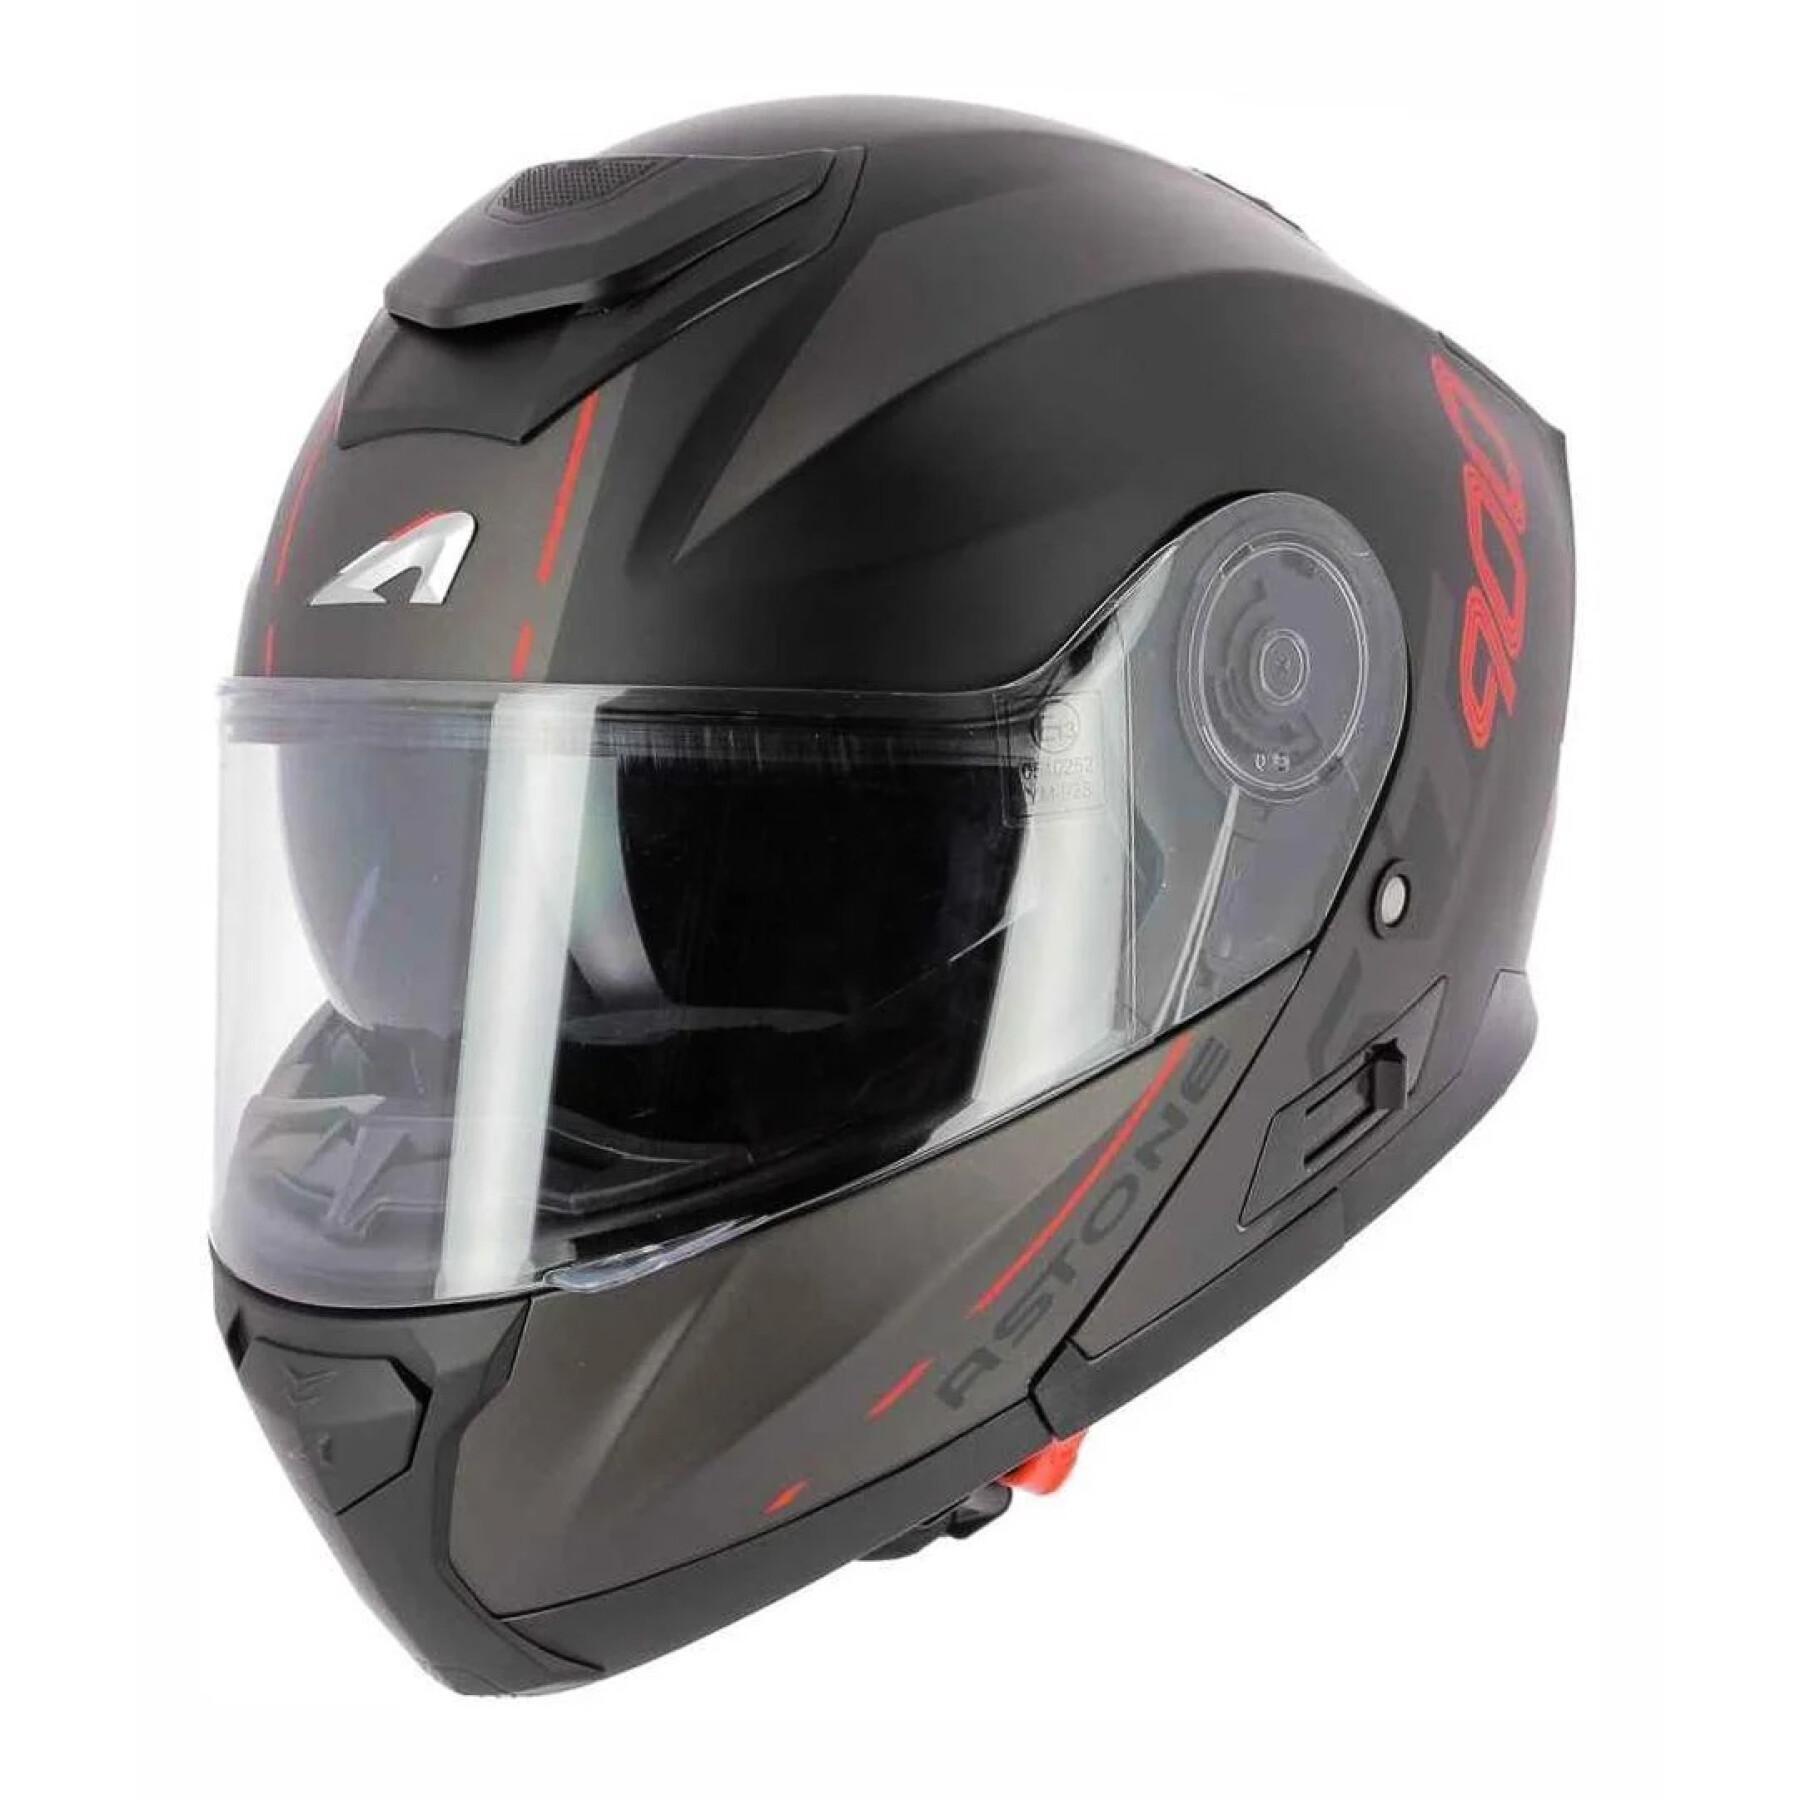 Modular motorcycle helmet Astone Rt900 Stripe